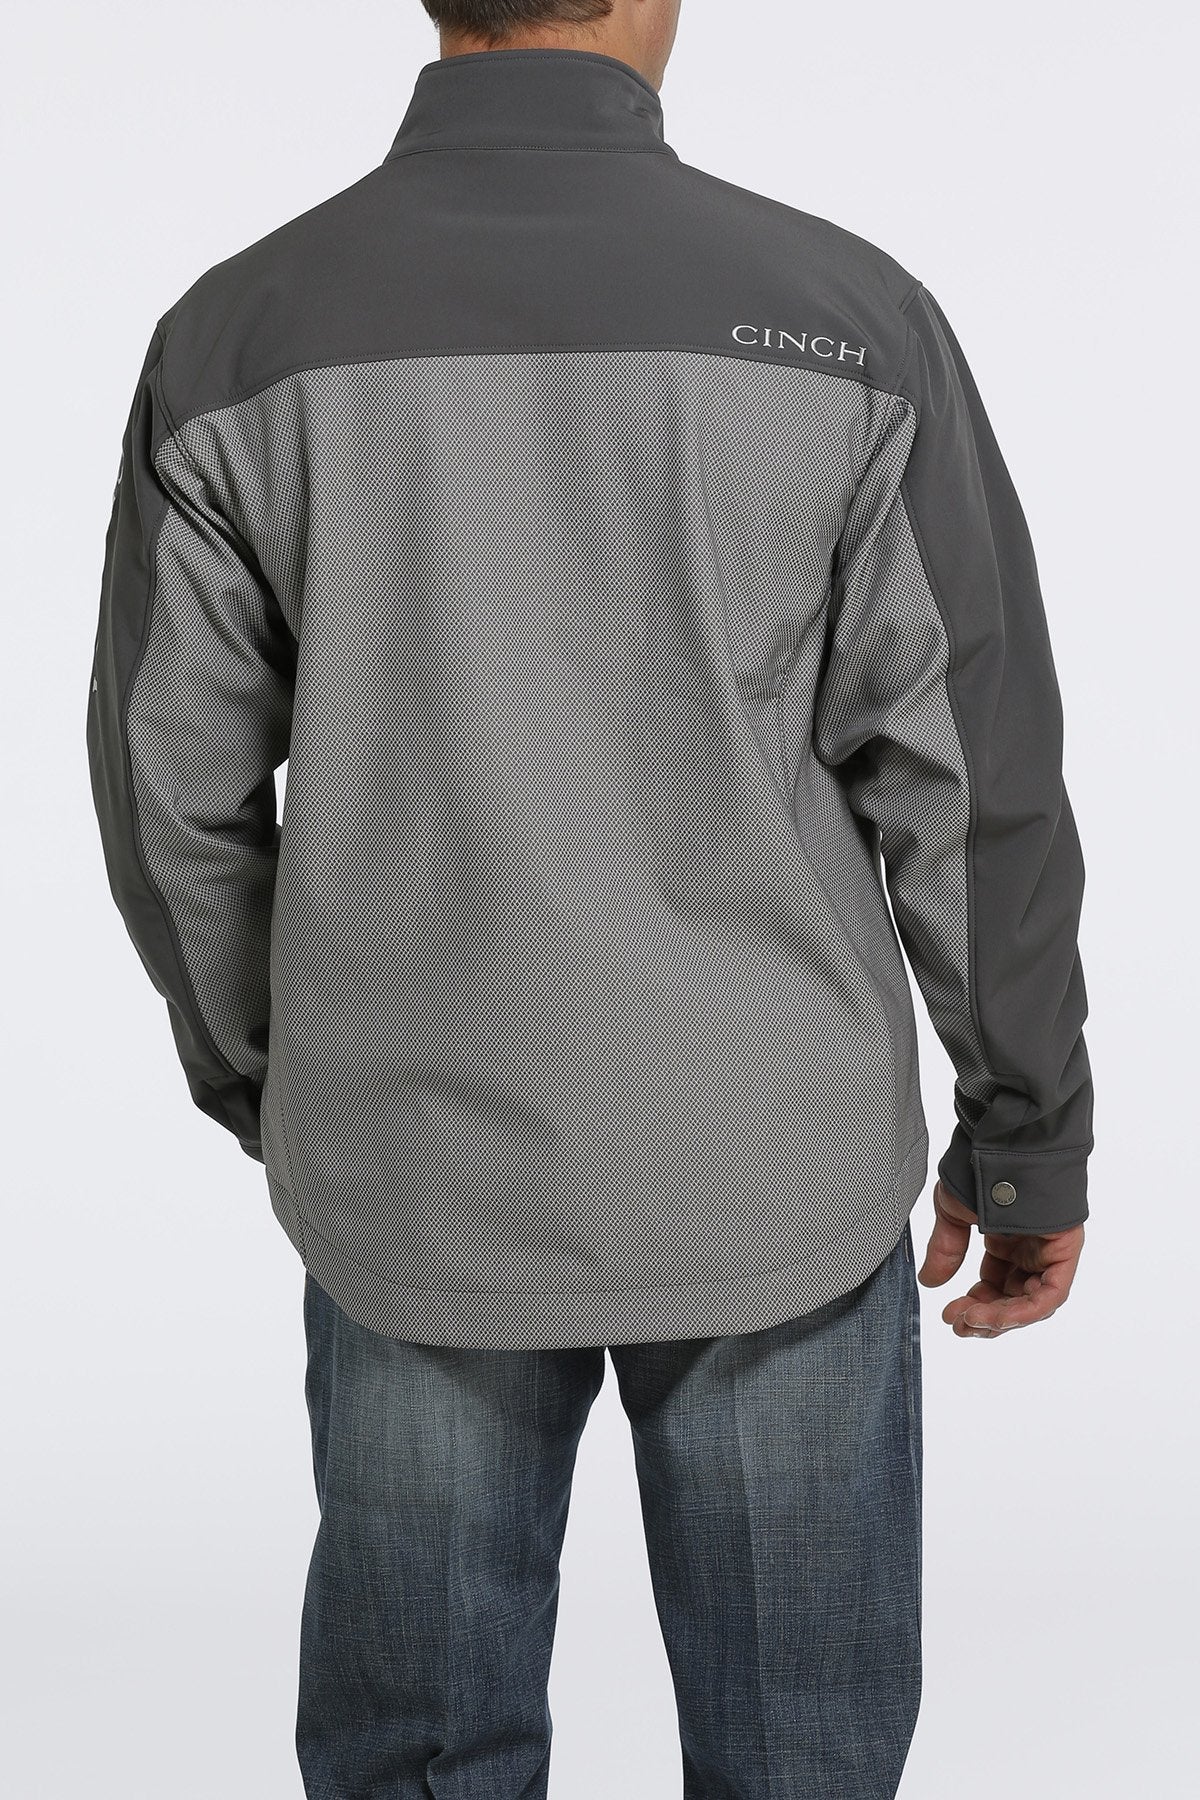 Cinch Mens Lined Bonded Grey Jacket - MWJ1565001